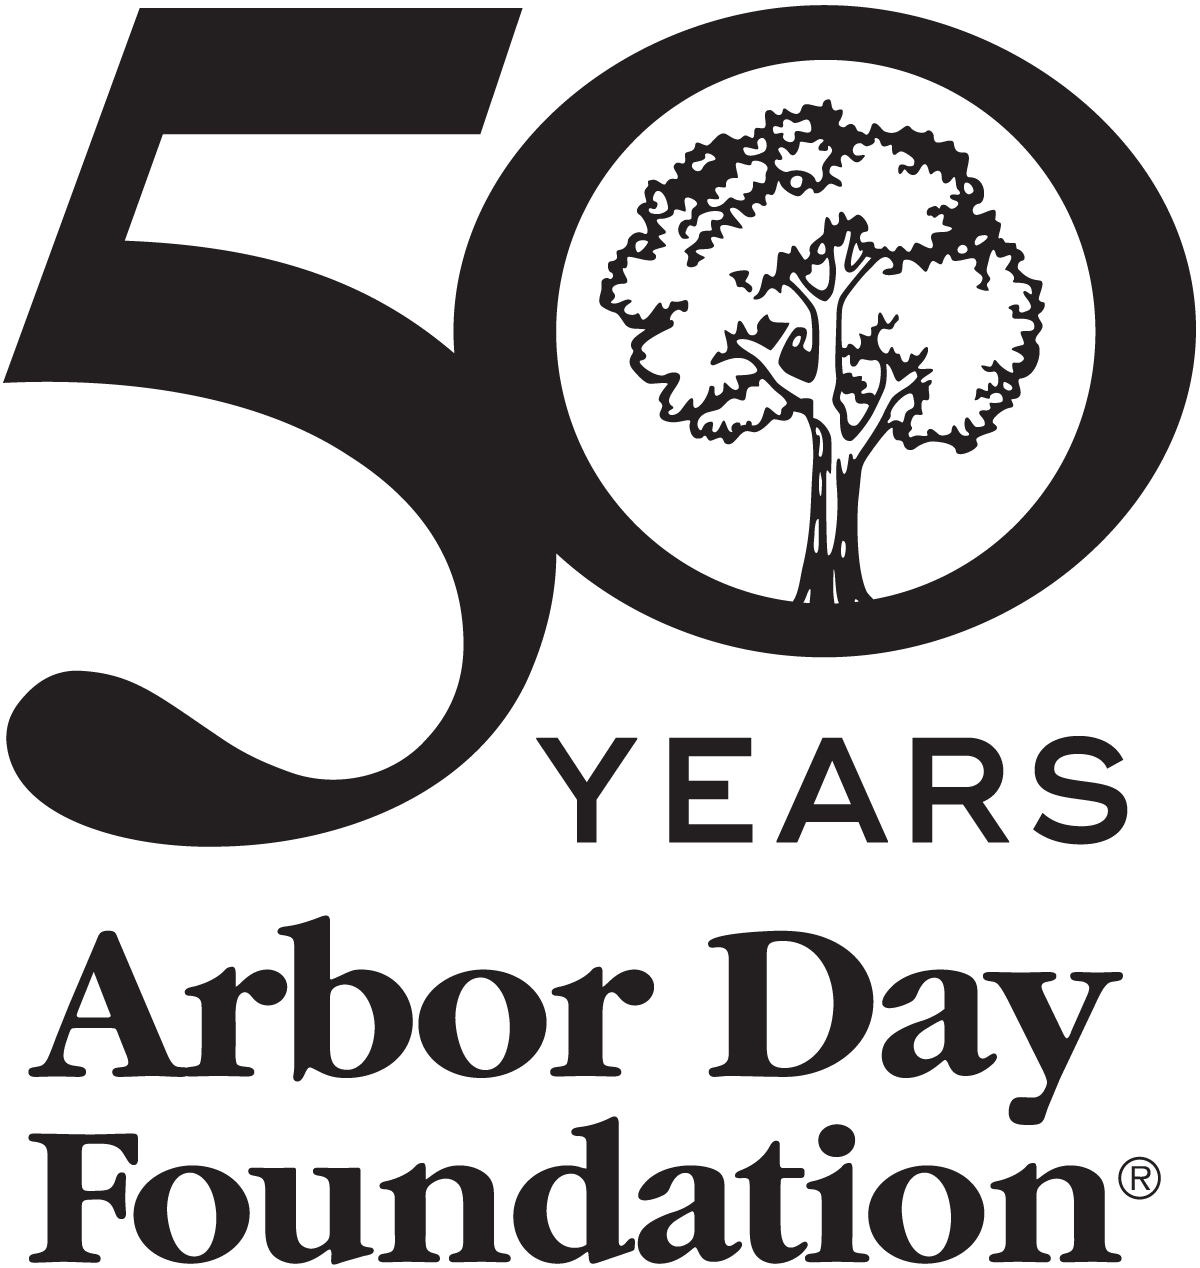 Arbor Day Foundation 50th anniversary logo